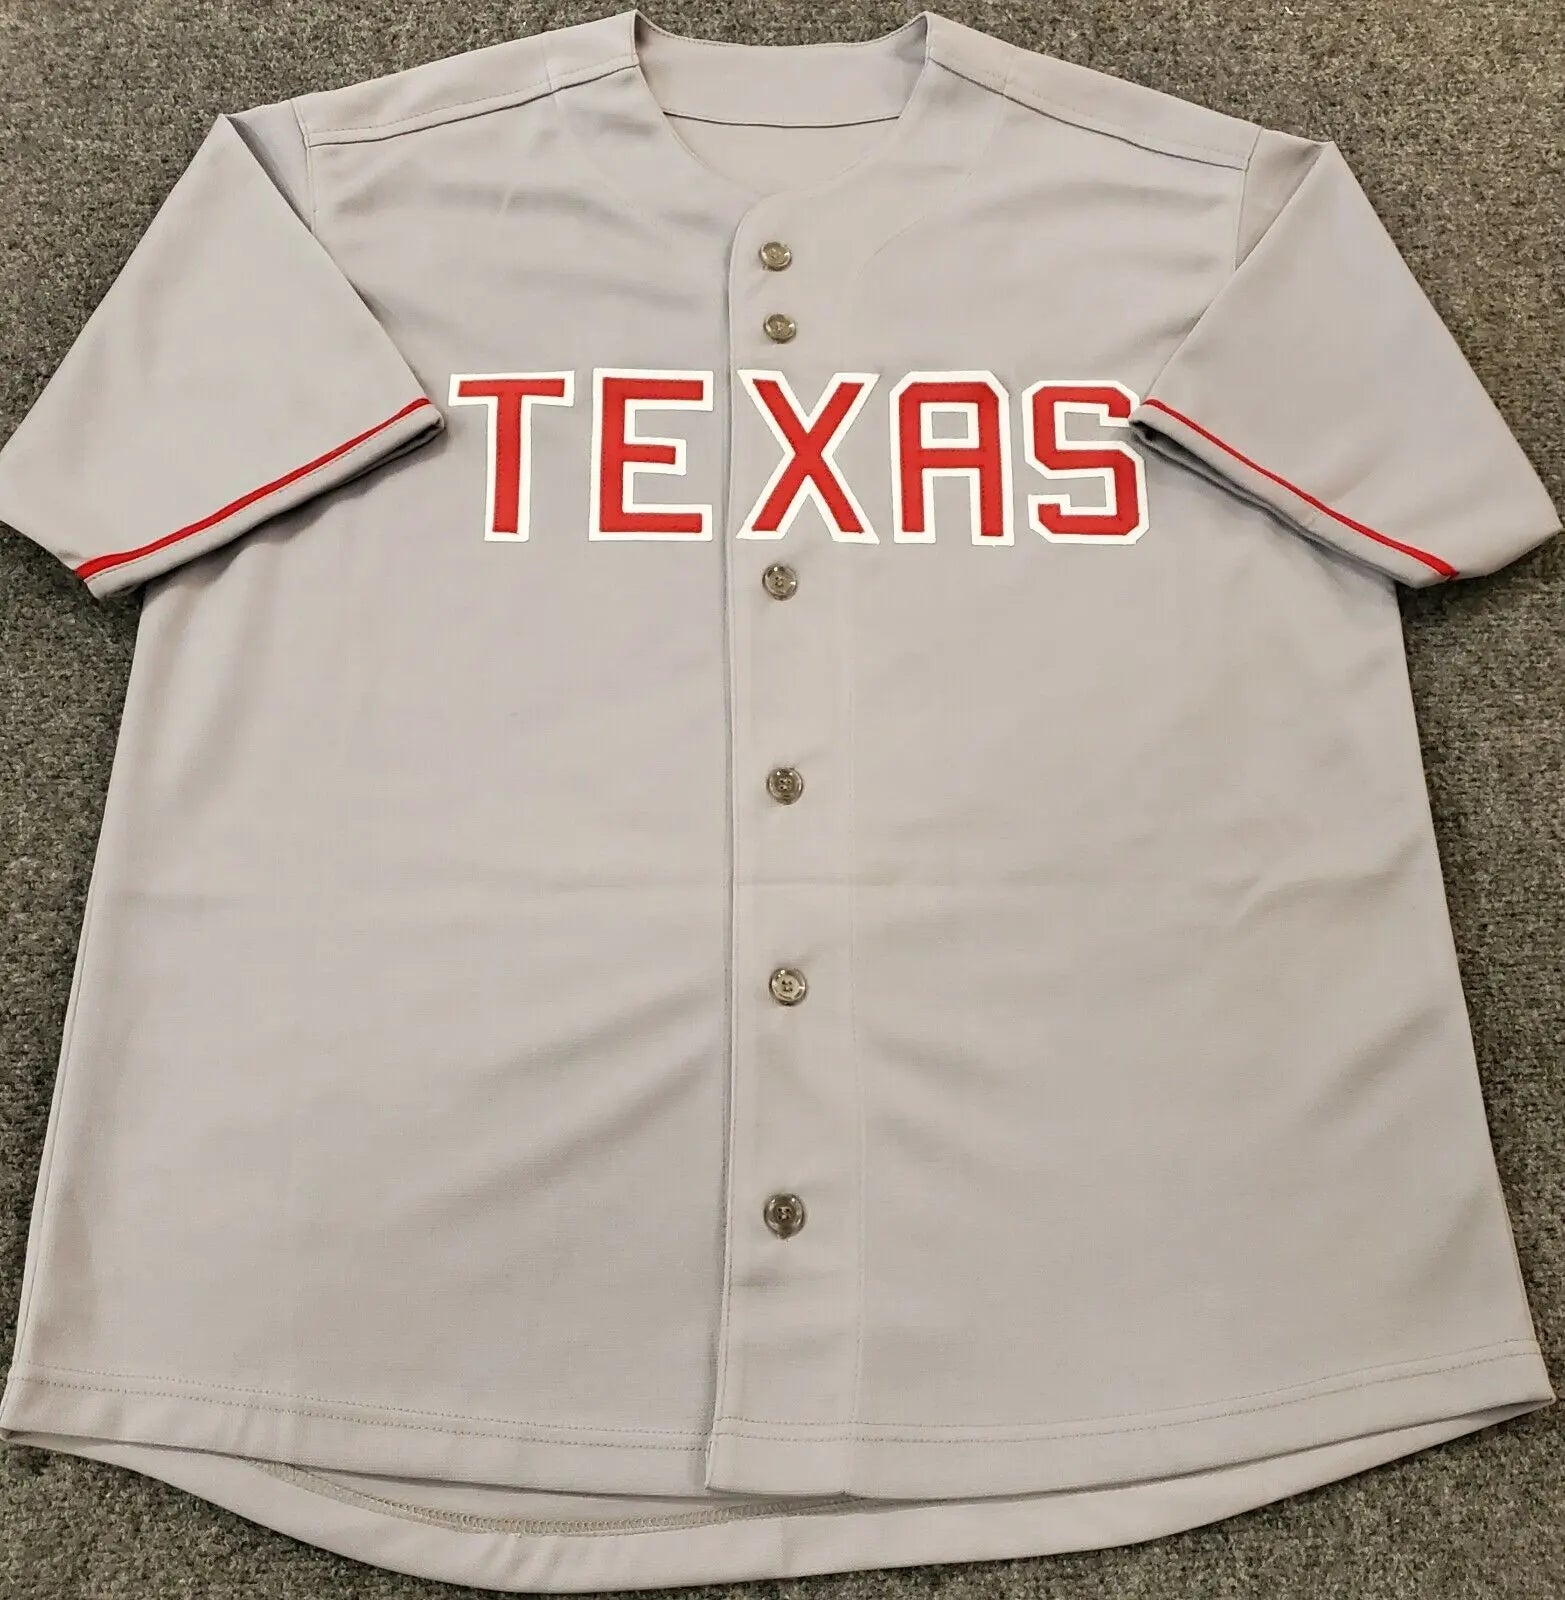 Texas Rangers Jersey 